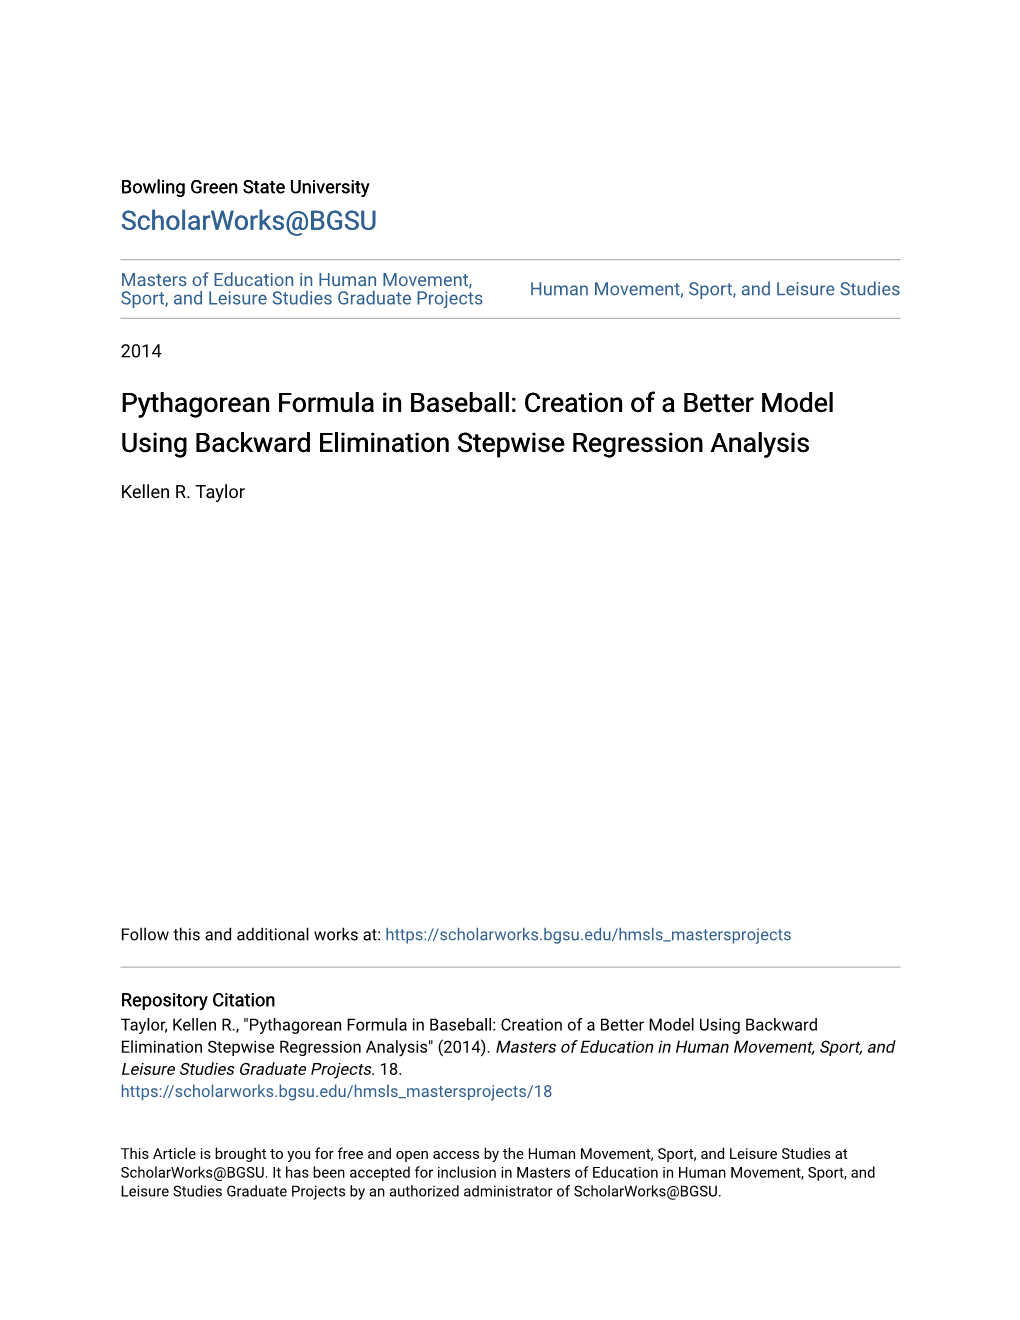 Pythagorean Formula in Baseball: Creation of a Better Model Using Backward Elimination Stepwise Regression Analysis